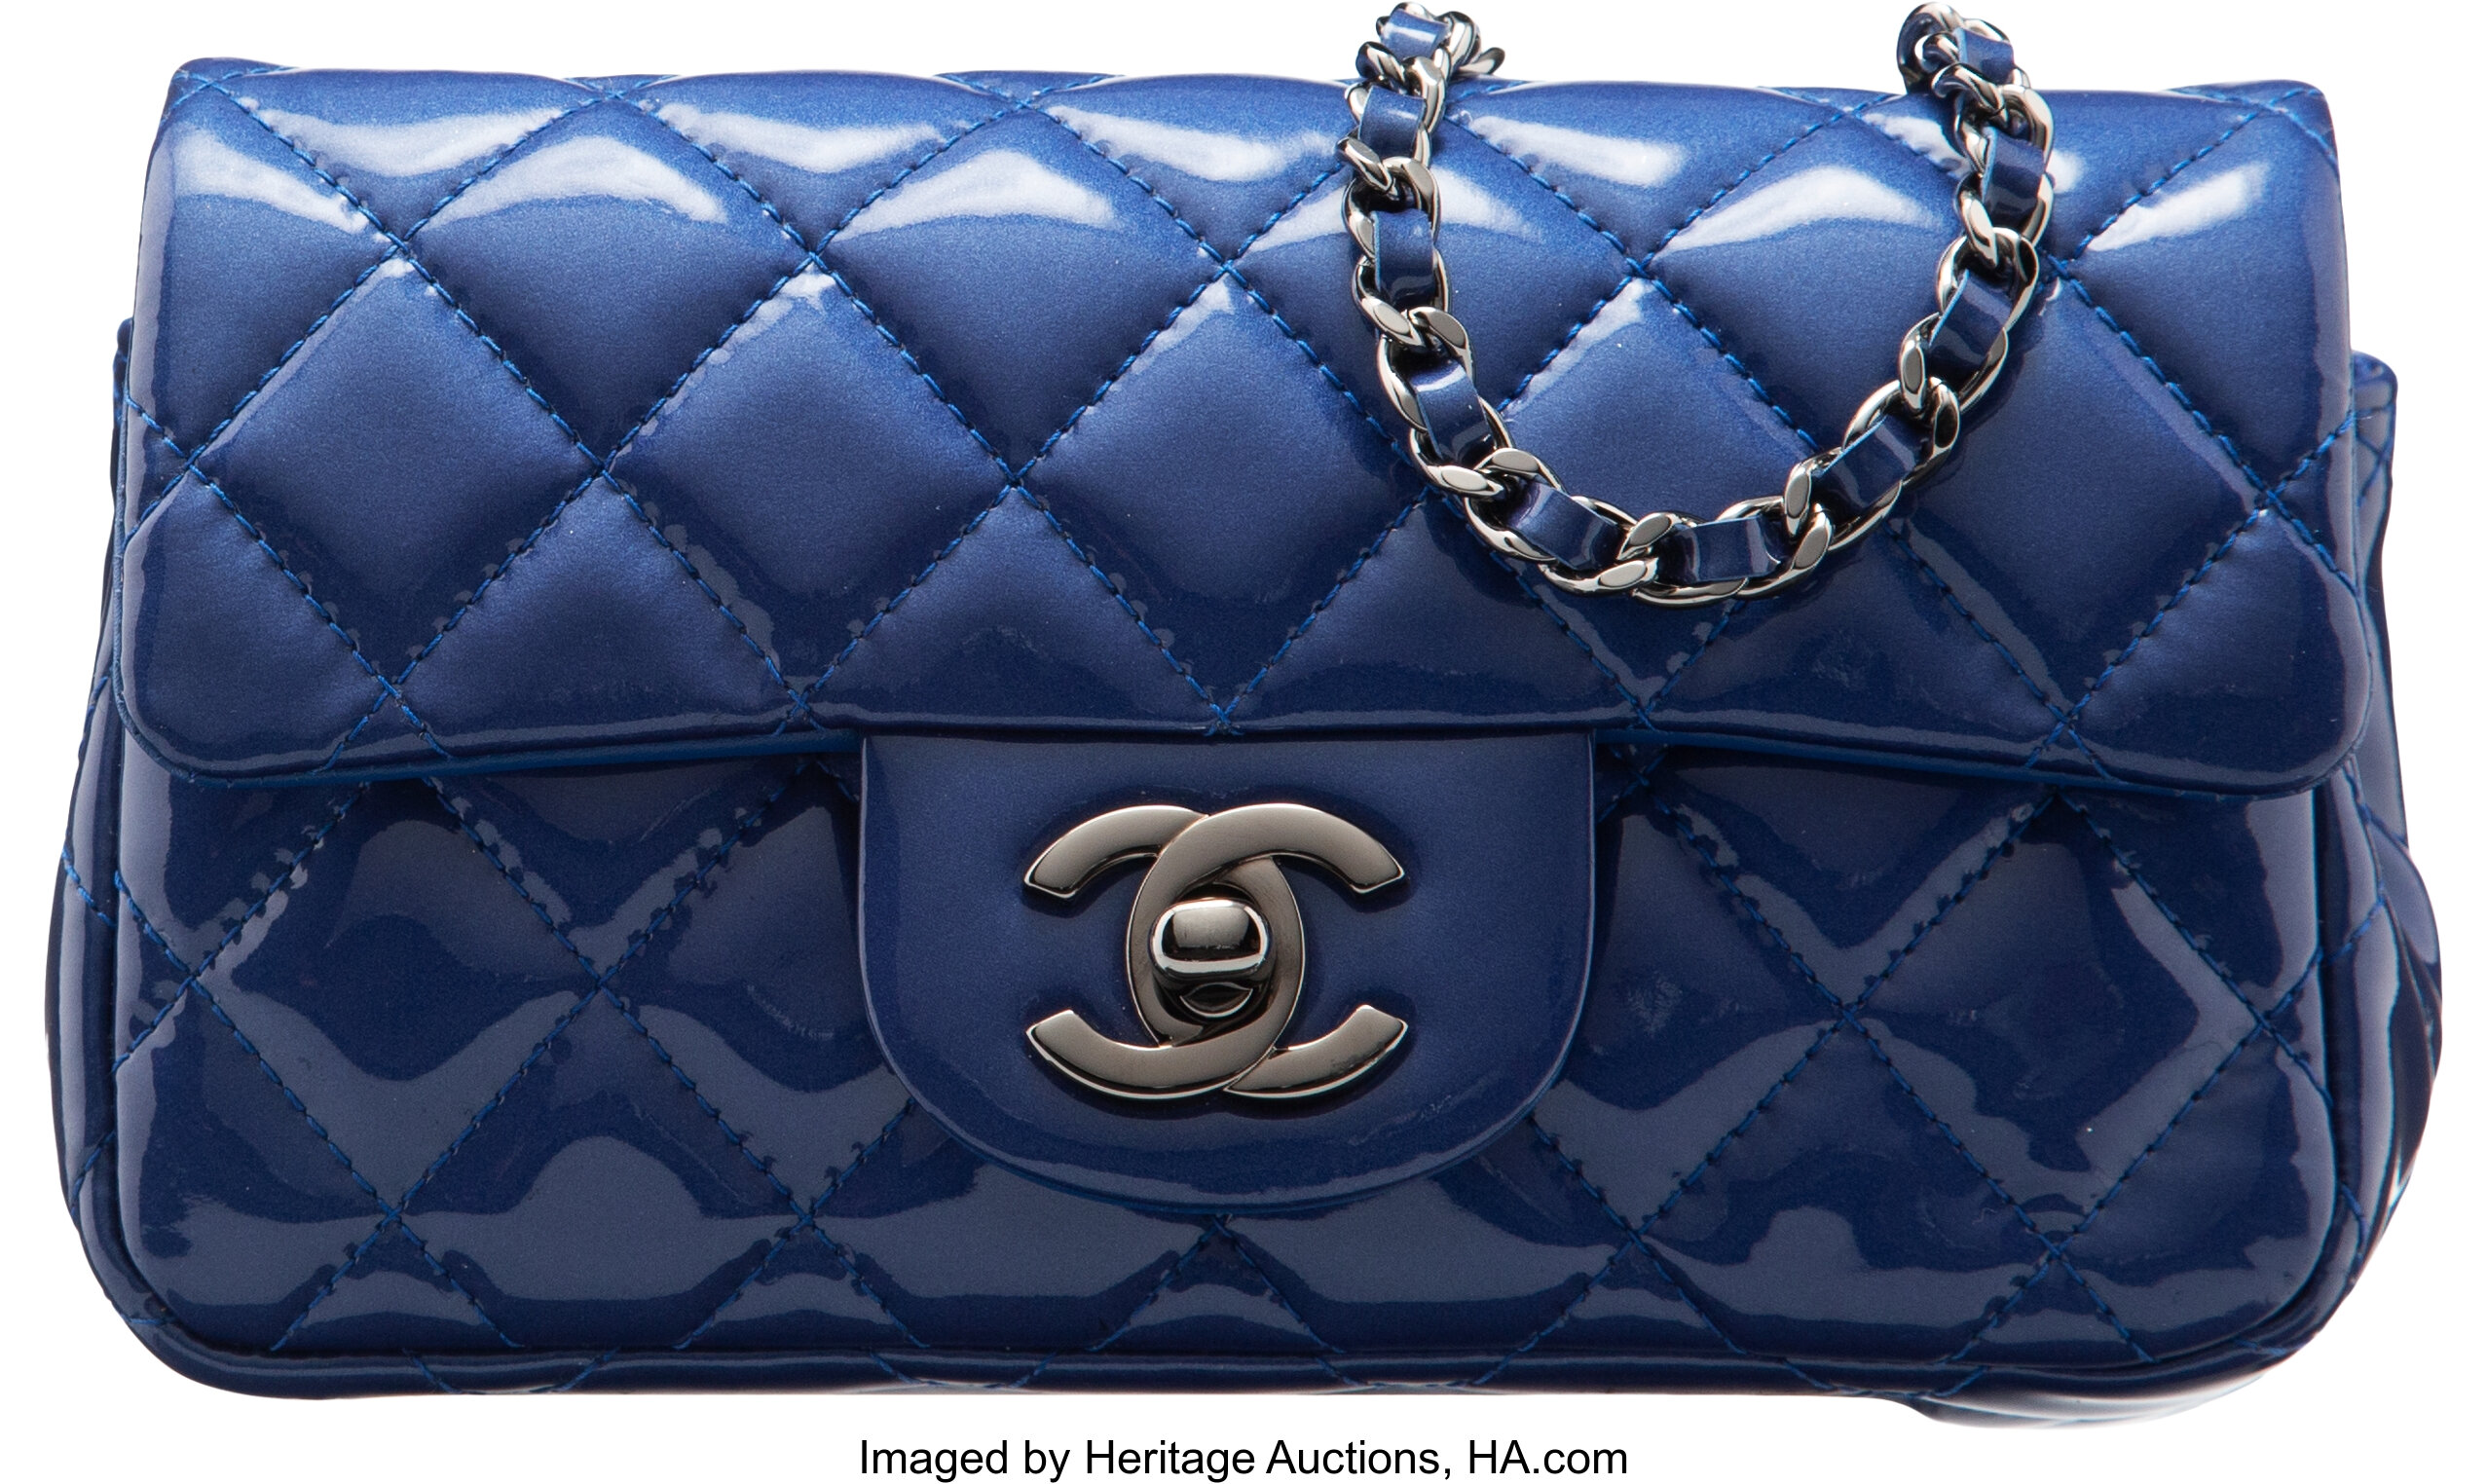 Chanel Blue Patent Leather Handbag For Sale at 1stDibs